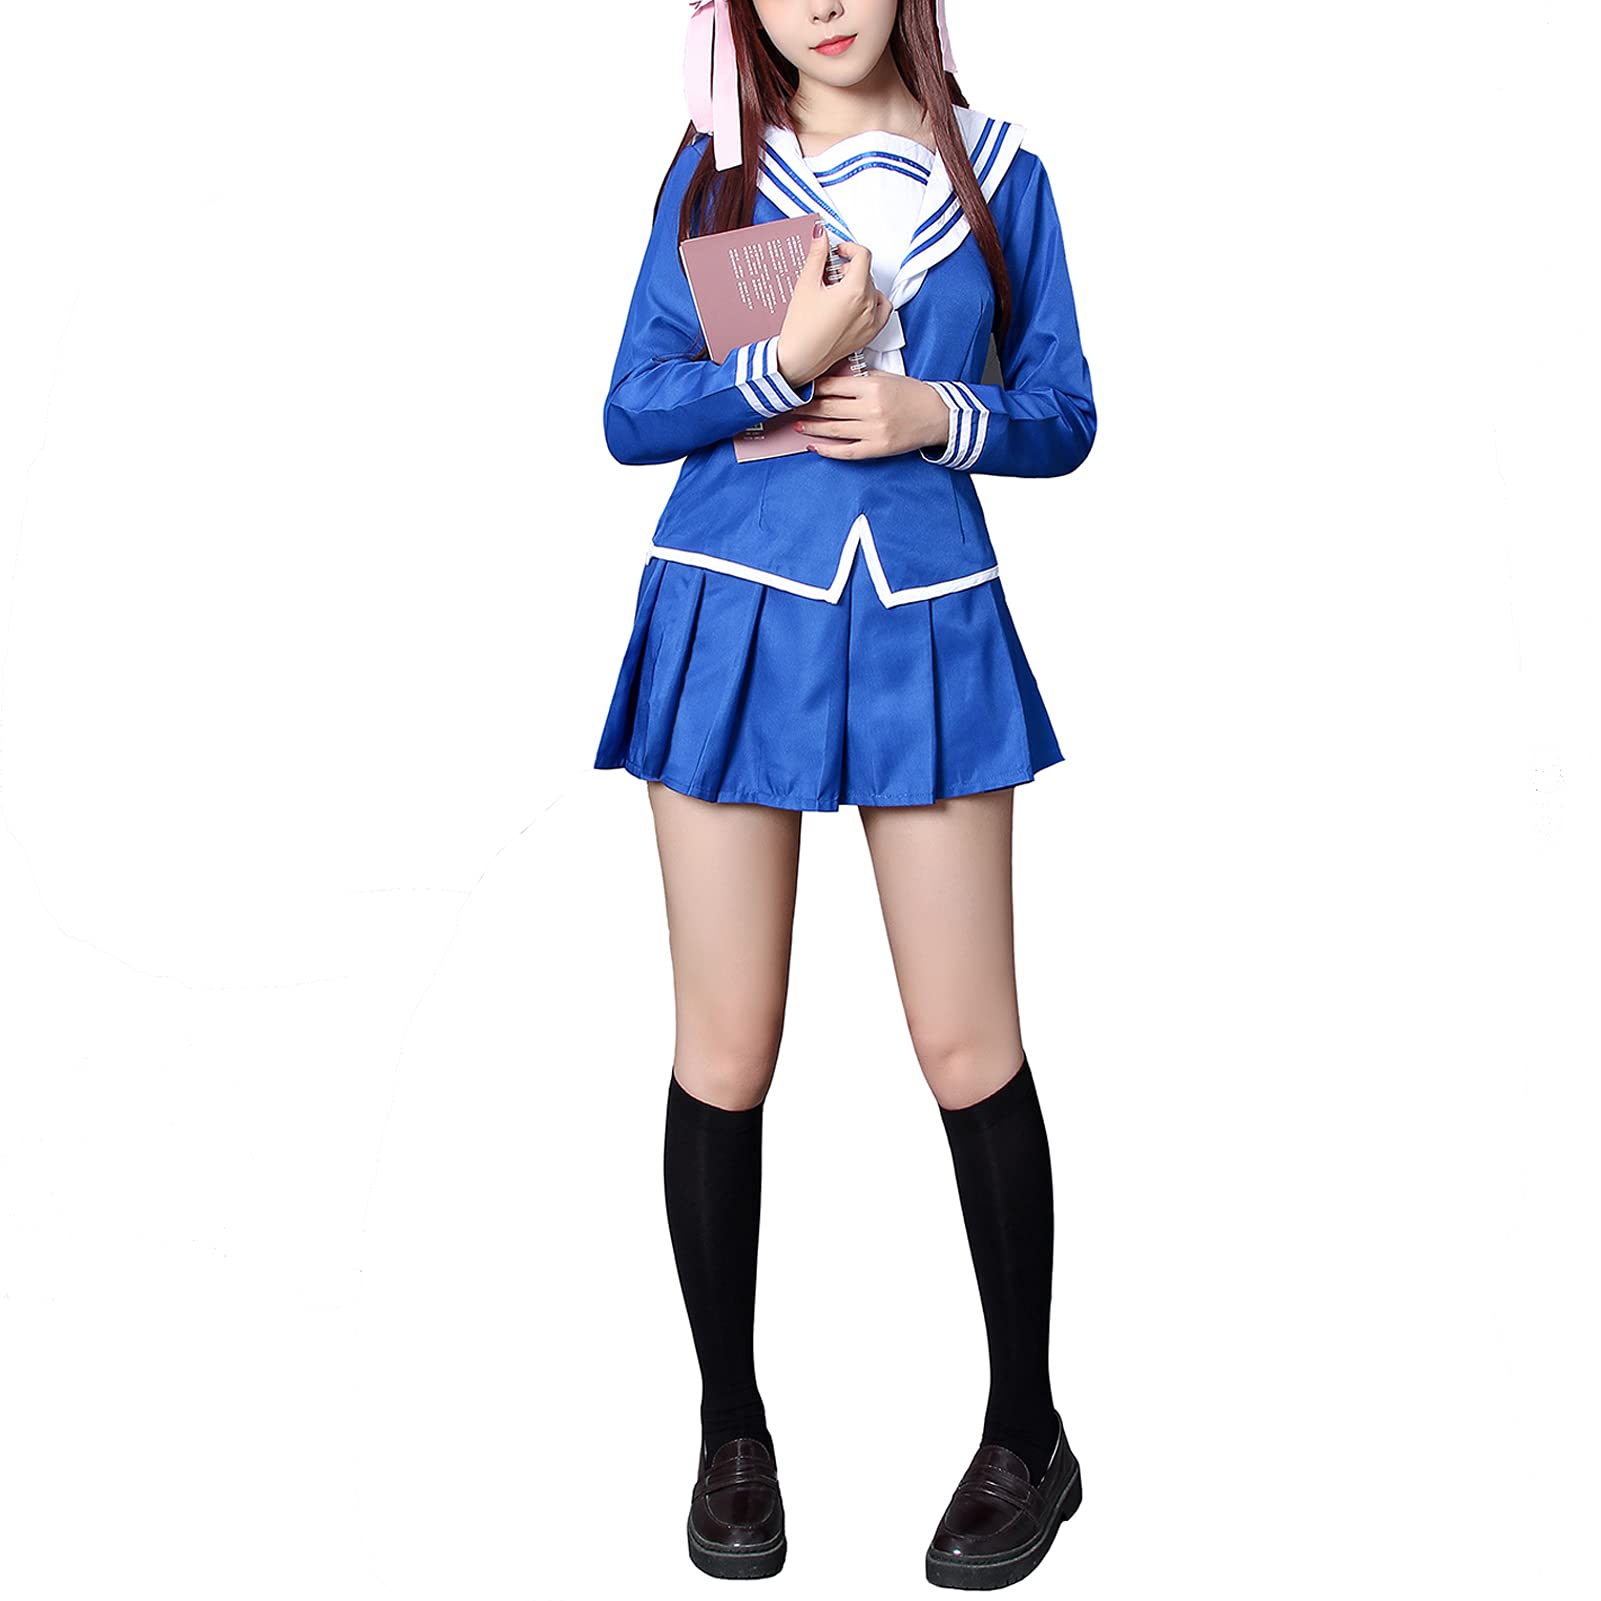 Tohru Honda Cosplay Kawaii Outfit